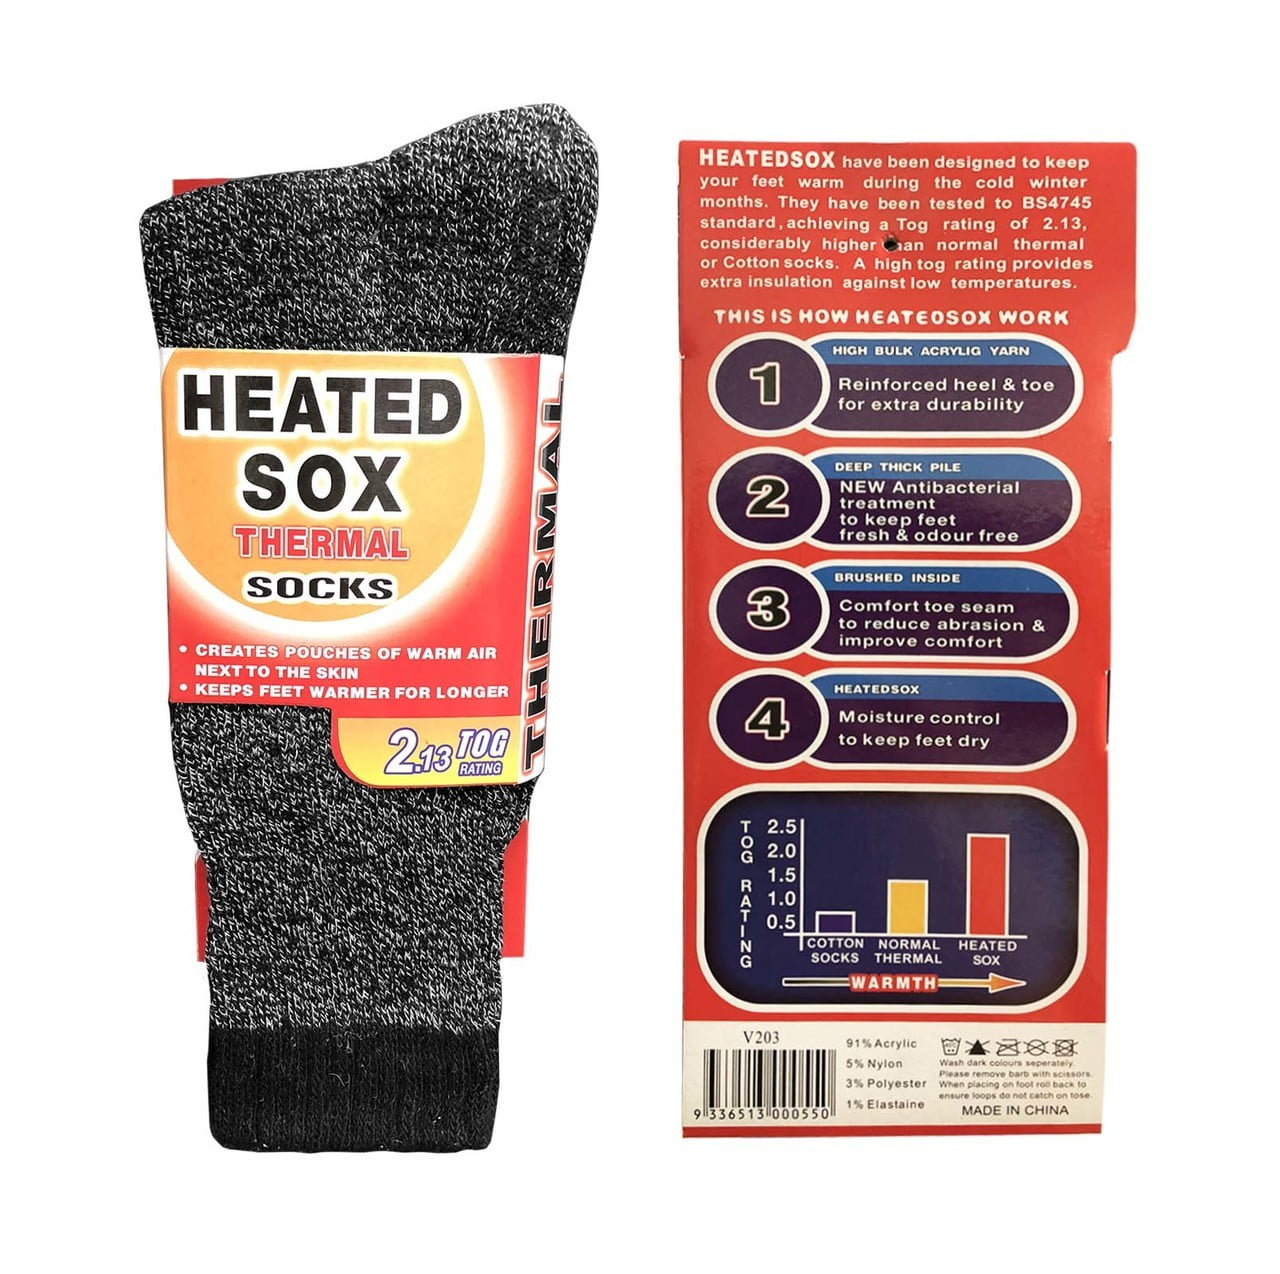 taal Kwade trouw Mentaliteit Men's Warm Thermal Socks Heated Sox Reinforced Toe & Heel 2.3 TOG -13F  Multi Packs - Walmart.com